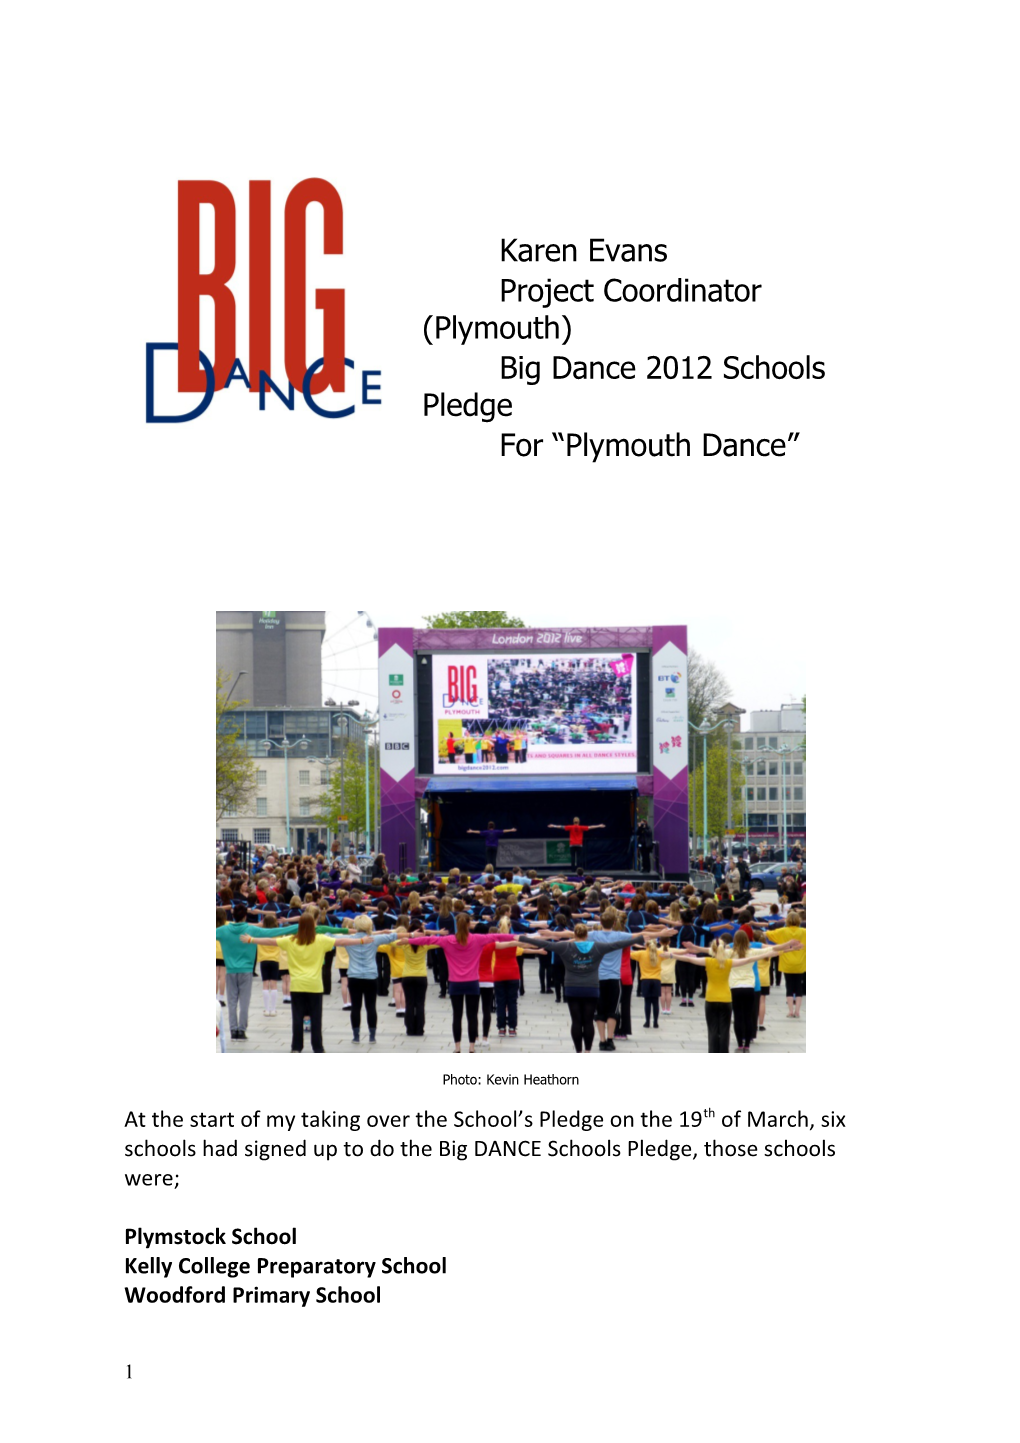 Big Dance 2012 Schools Pledge